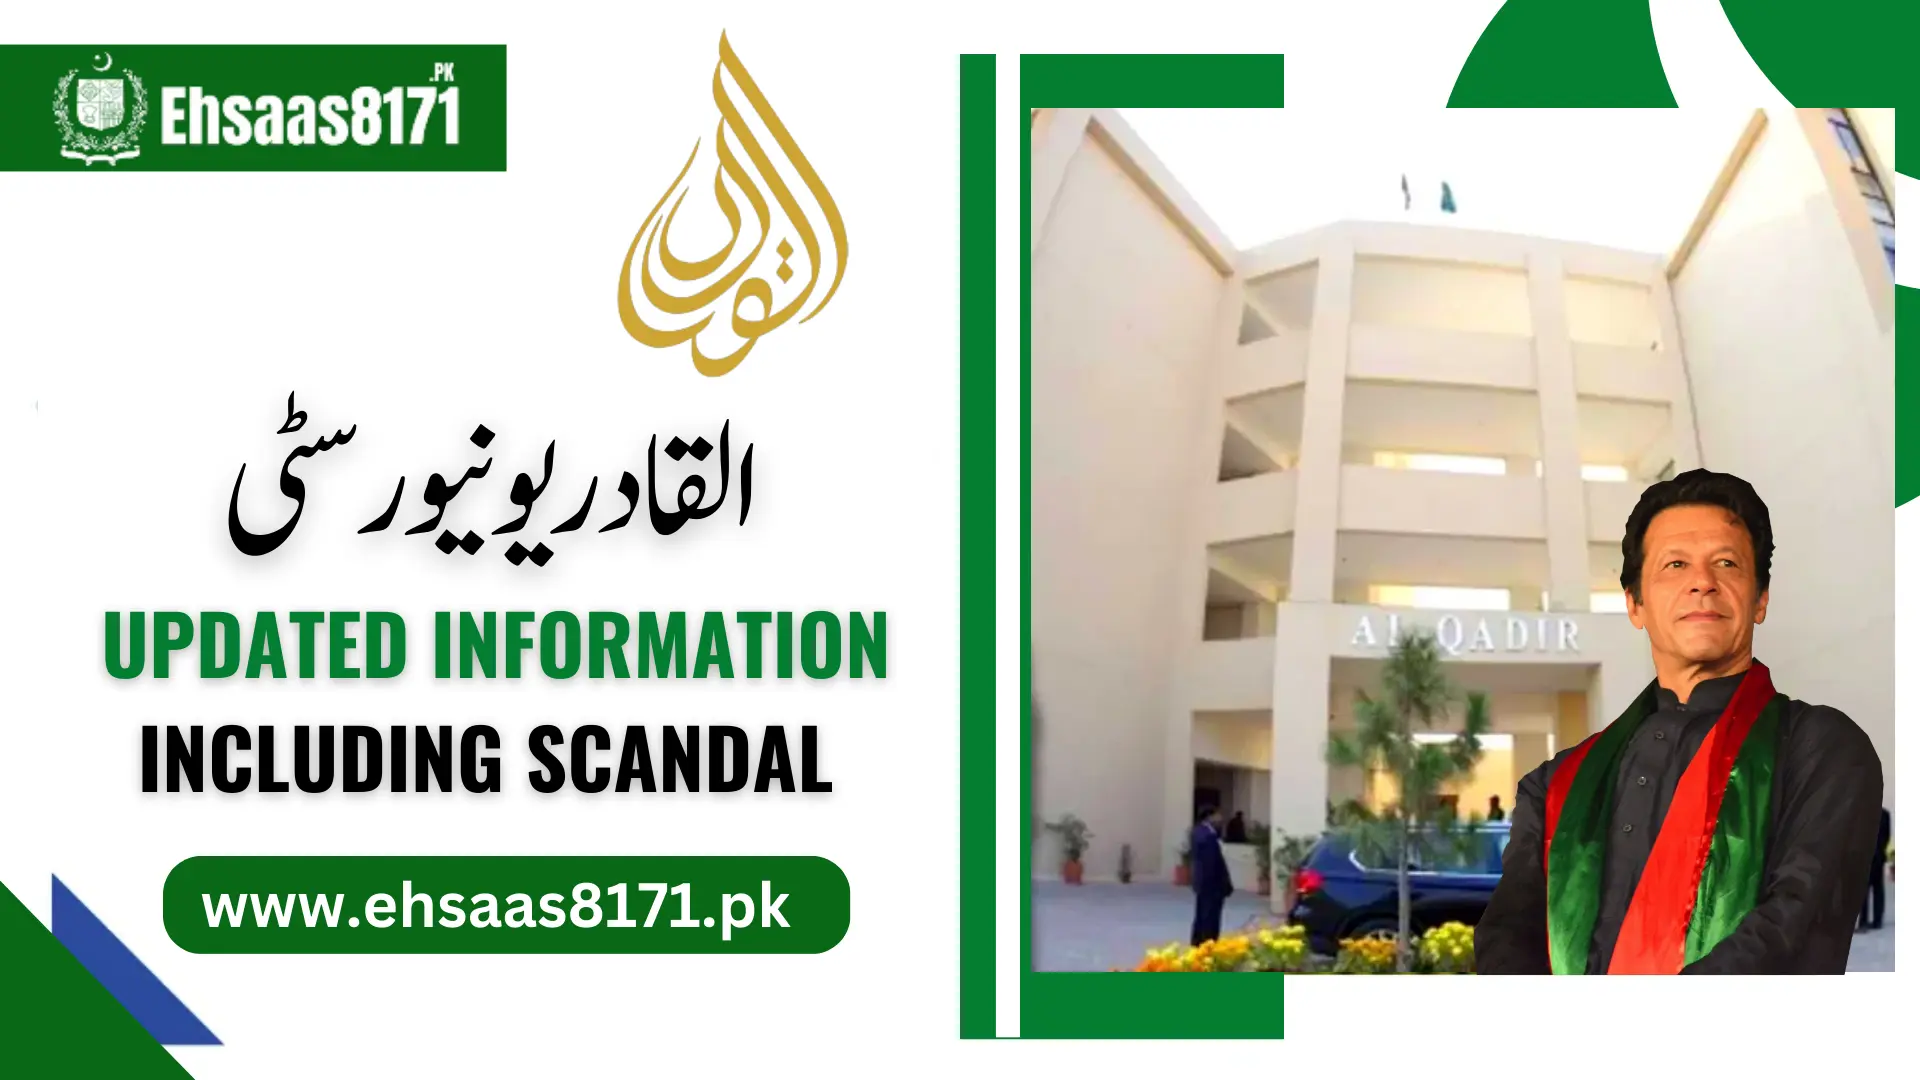 Al Qadir University Updated Information Including Scandal: